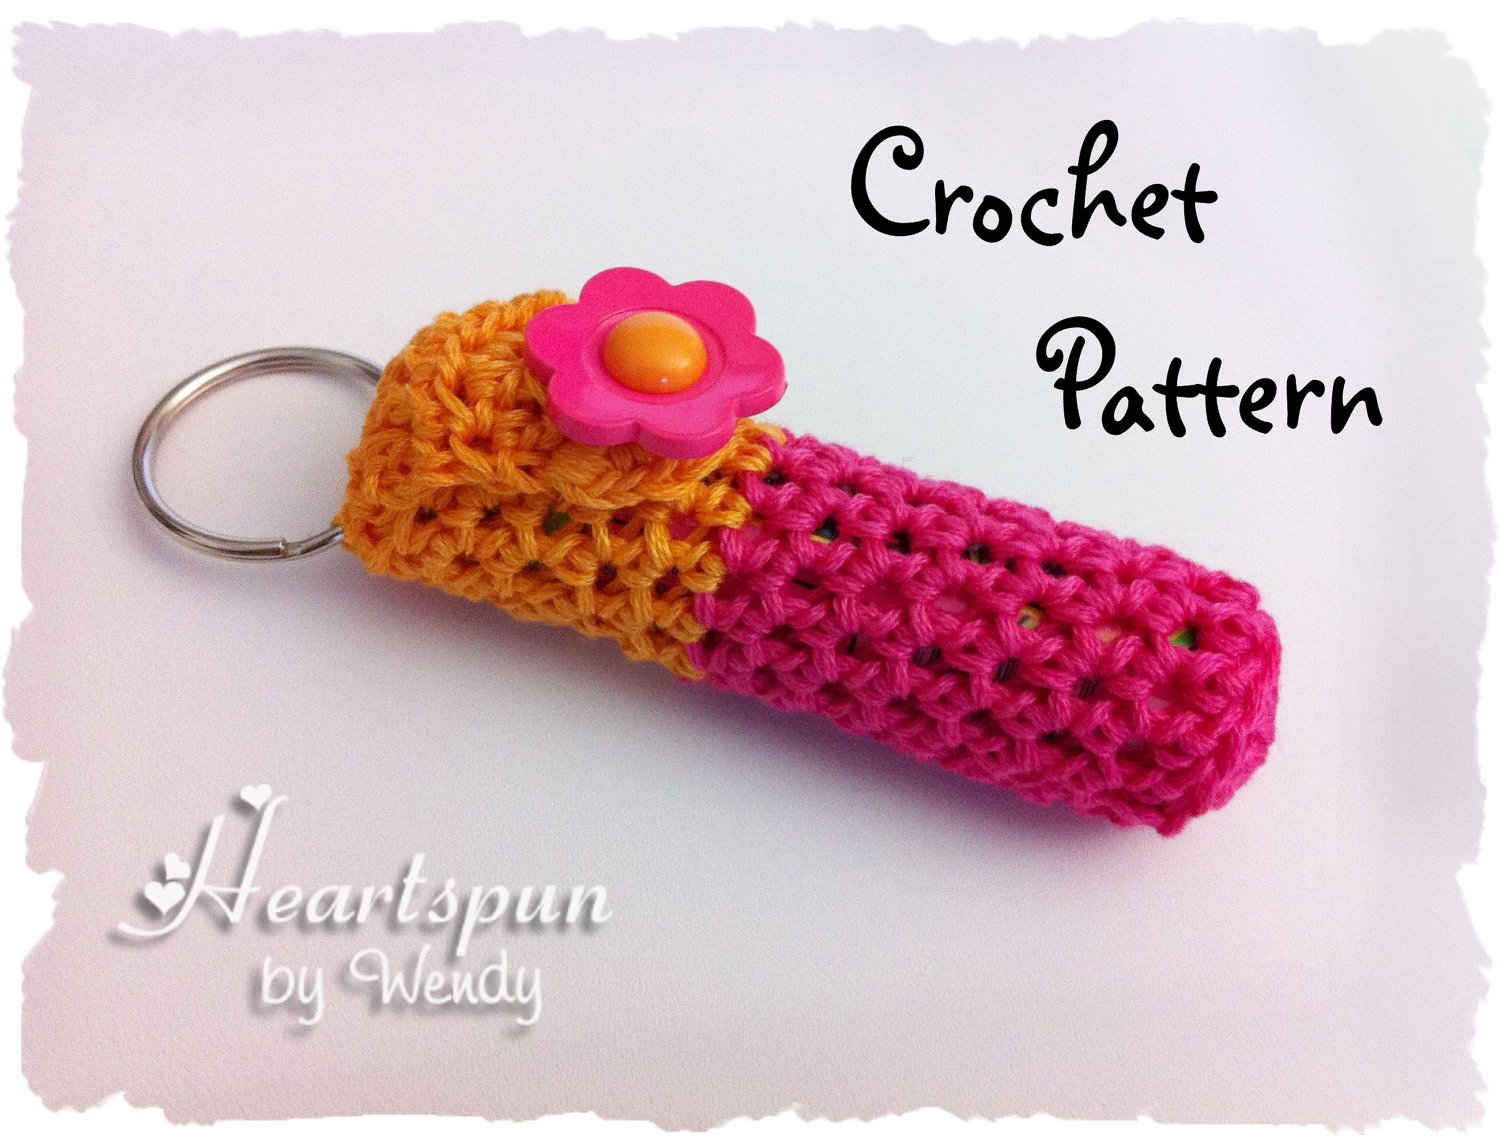 Crochet Holder Pattern Crochet Pattern To Make A Lip Balm Holder Key Ring For Chap Etsy